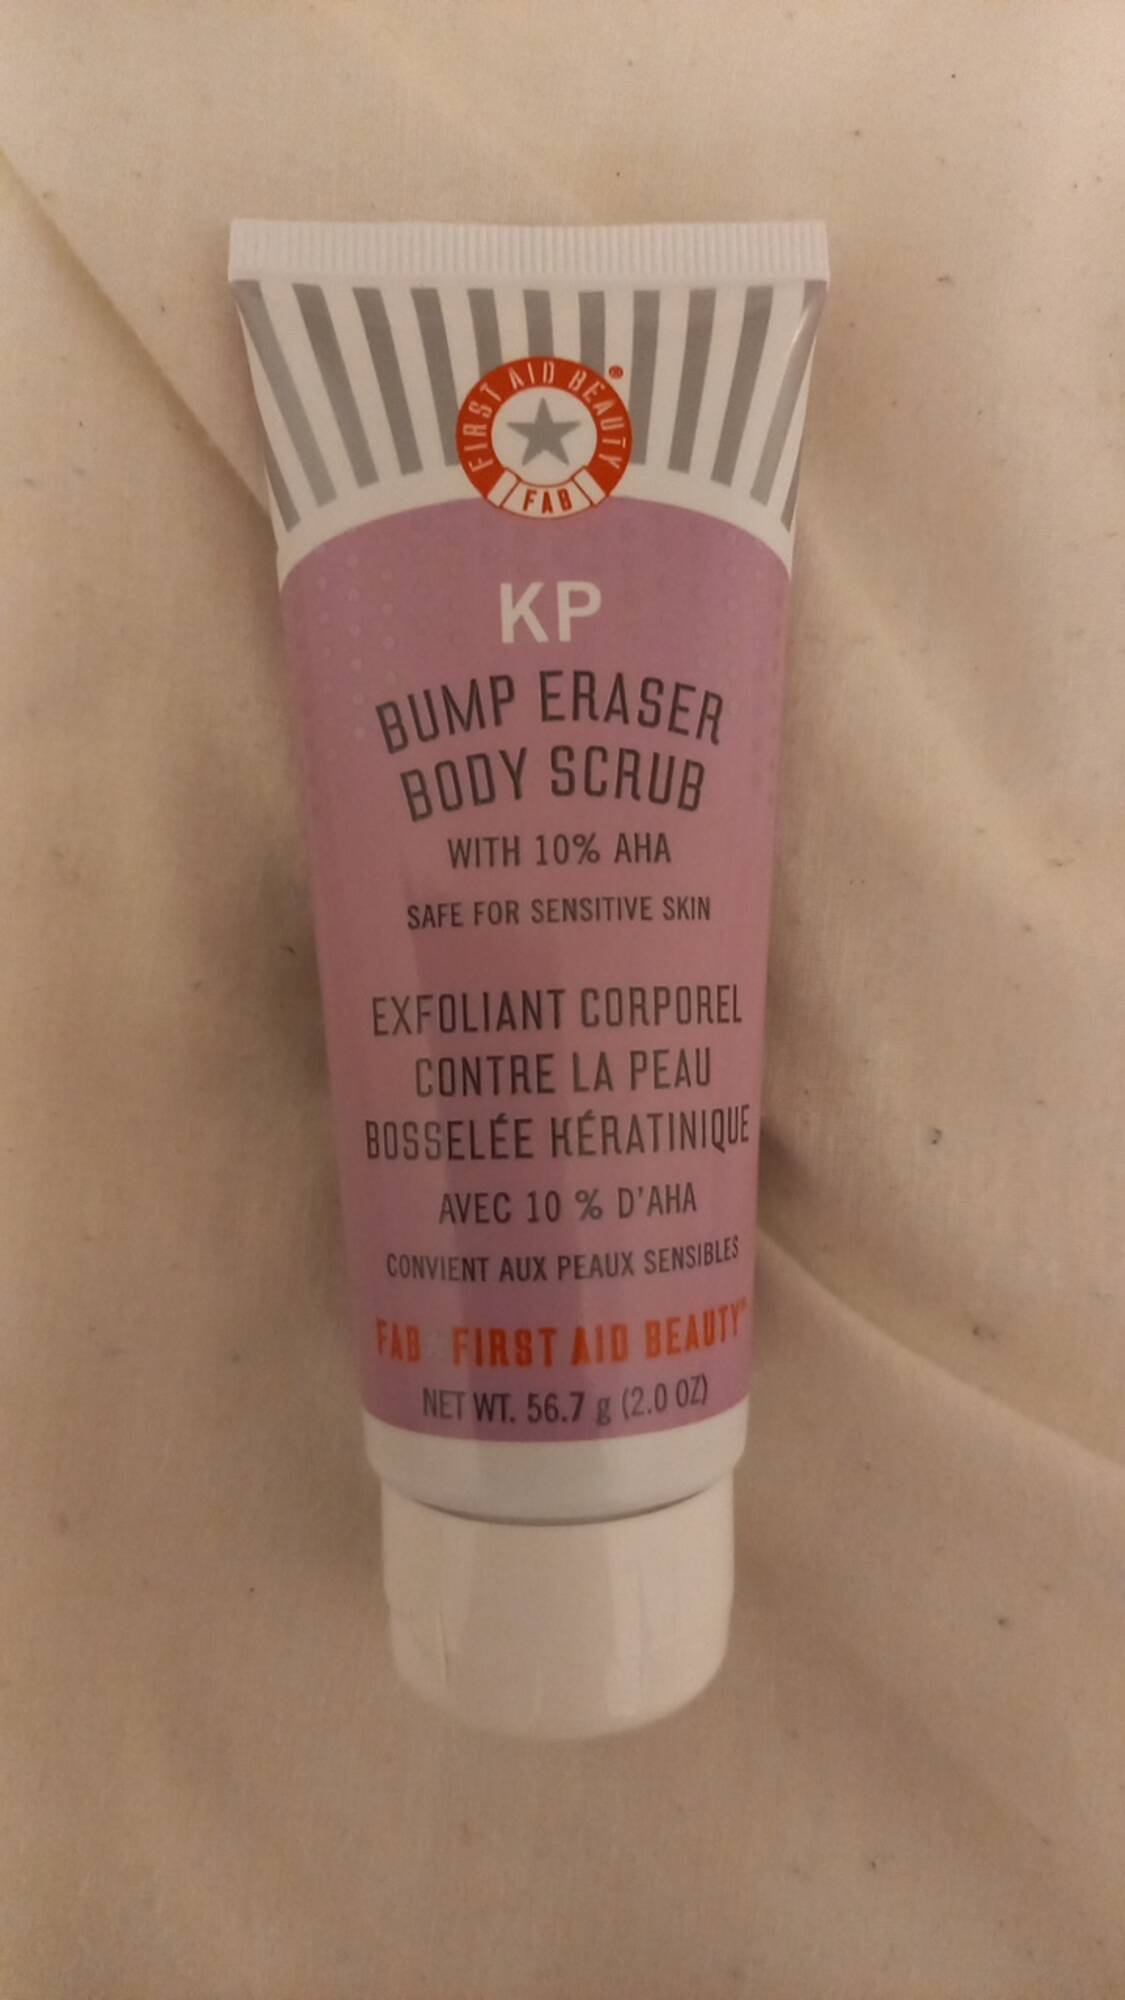 FIRST AID BEAUTY - Bump eraser - Exfoliant corporel